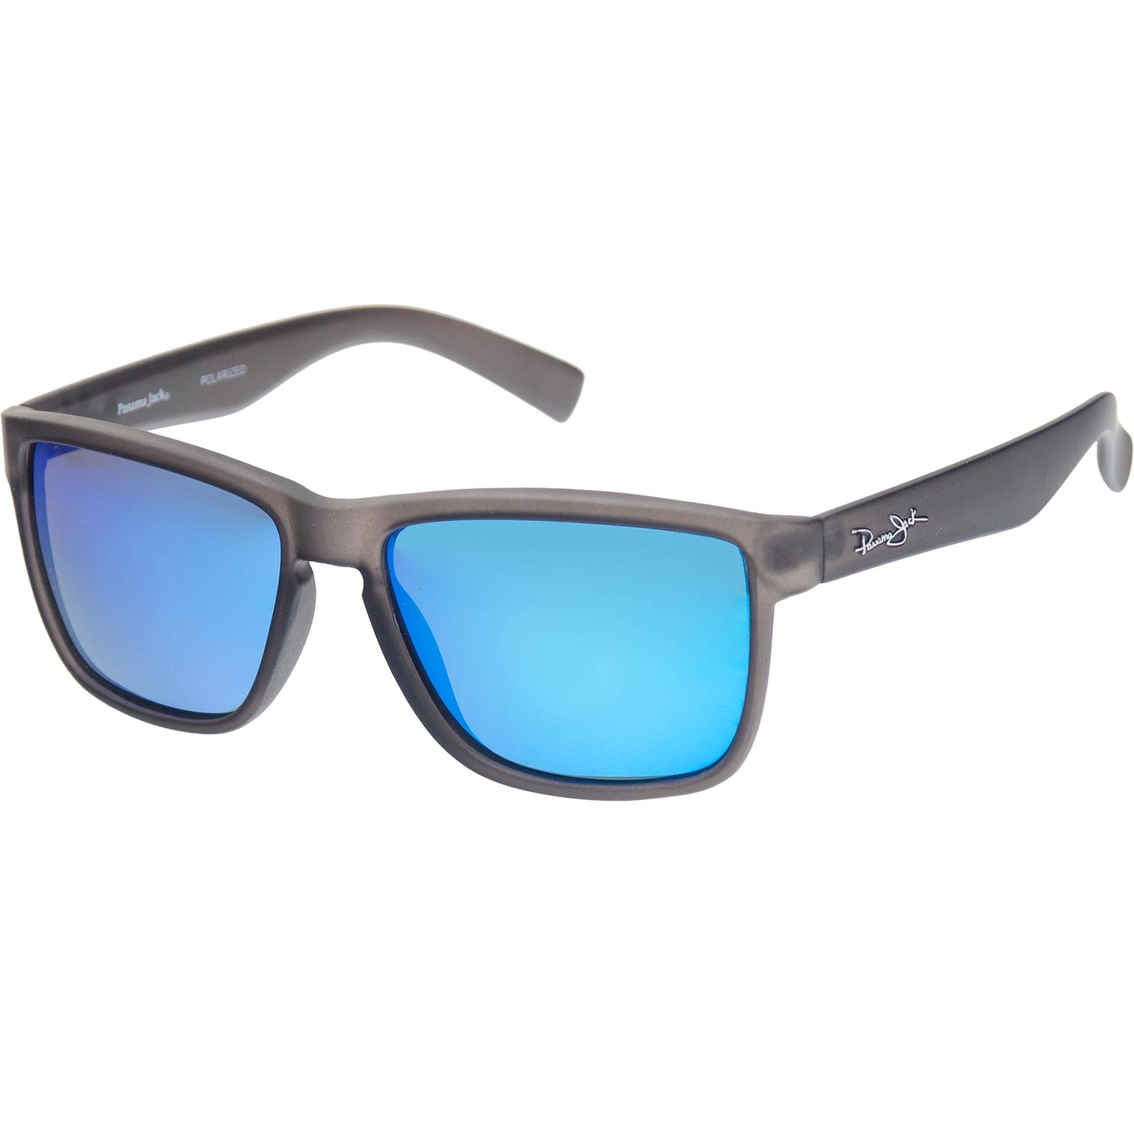 Foster Grant Panama Jack Polarized Gray Wayfarer Sunglasses 19388spo400, Sunglasses, Clothing & Accessories